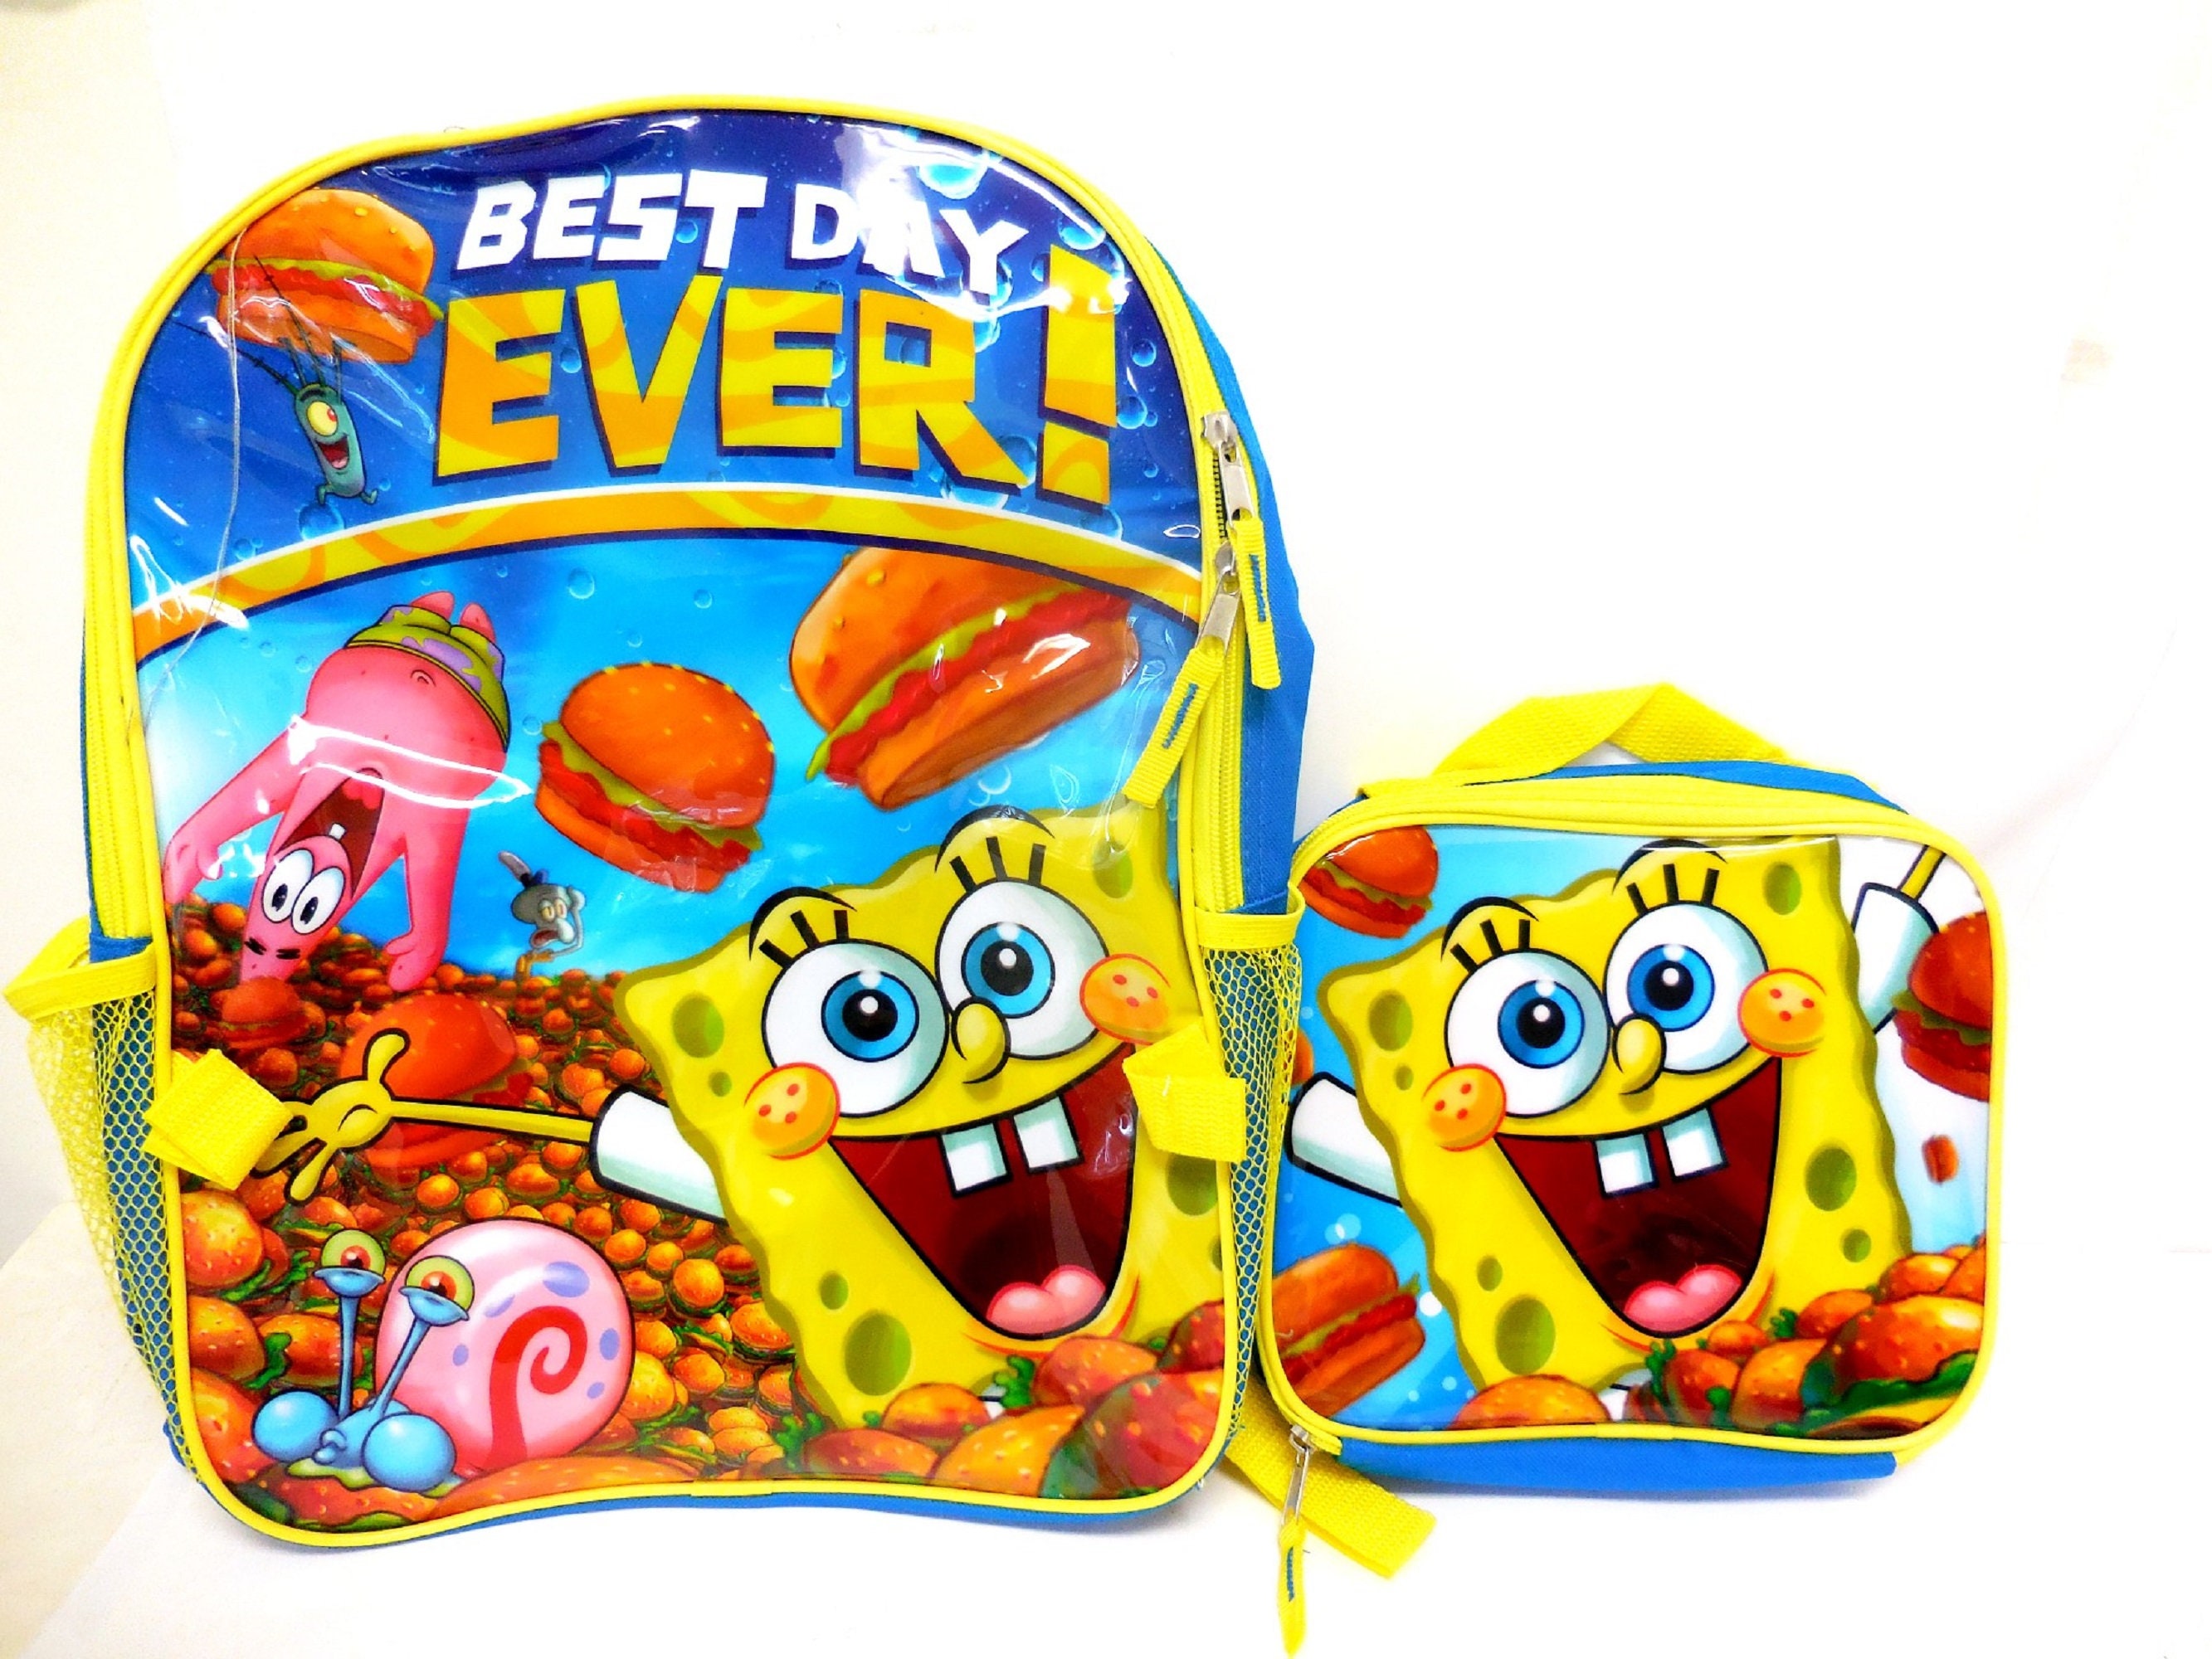 Spongebob pack. Backpack Spongebob. Spongebob Squarepants Pack.. Sweet Box Sponge Bob Square Pants мармелад с игрушкой 10 гр.. Spongebob Plush rare.